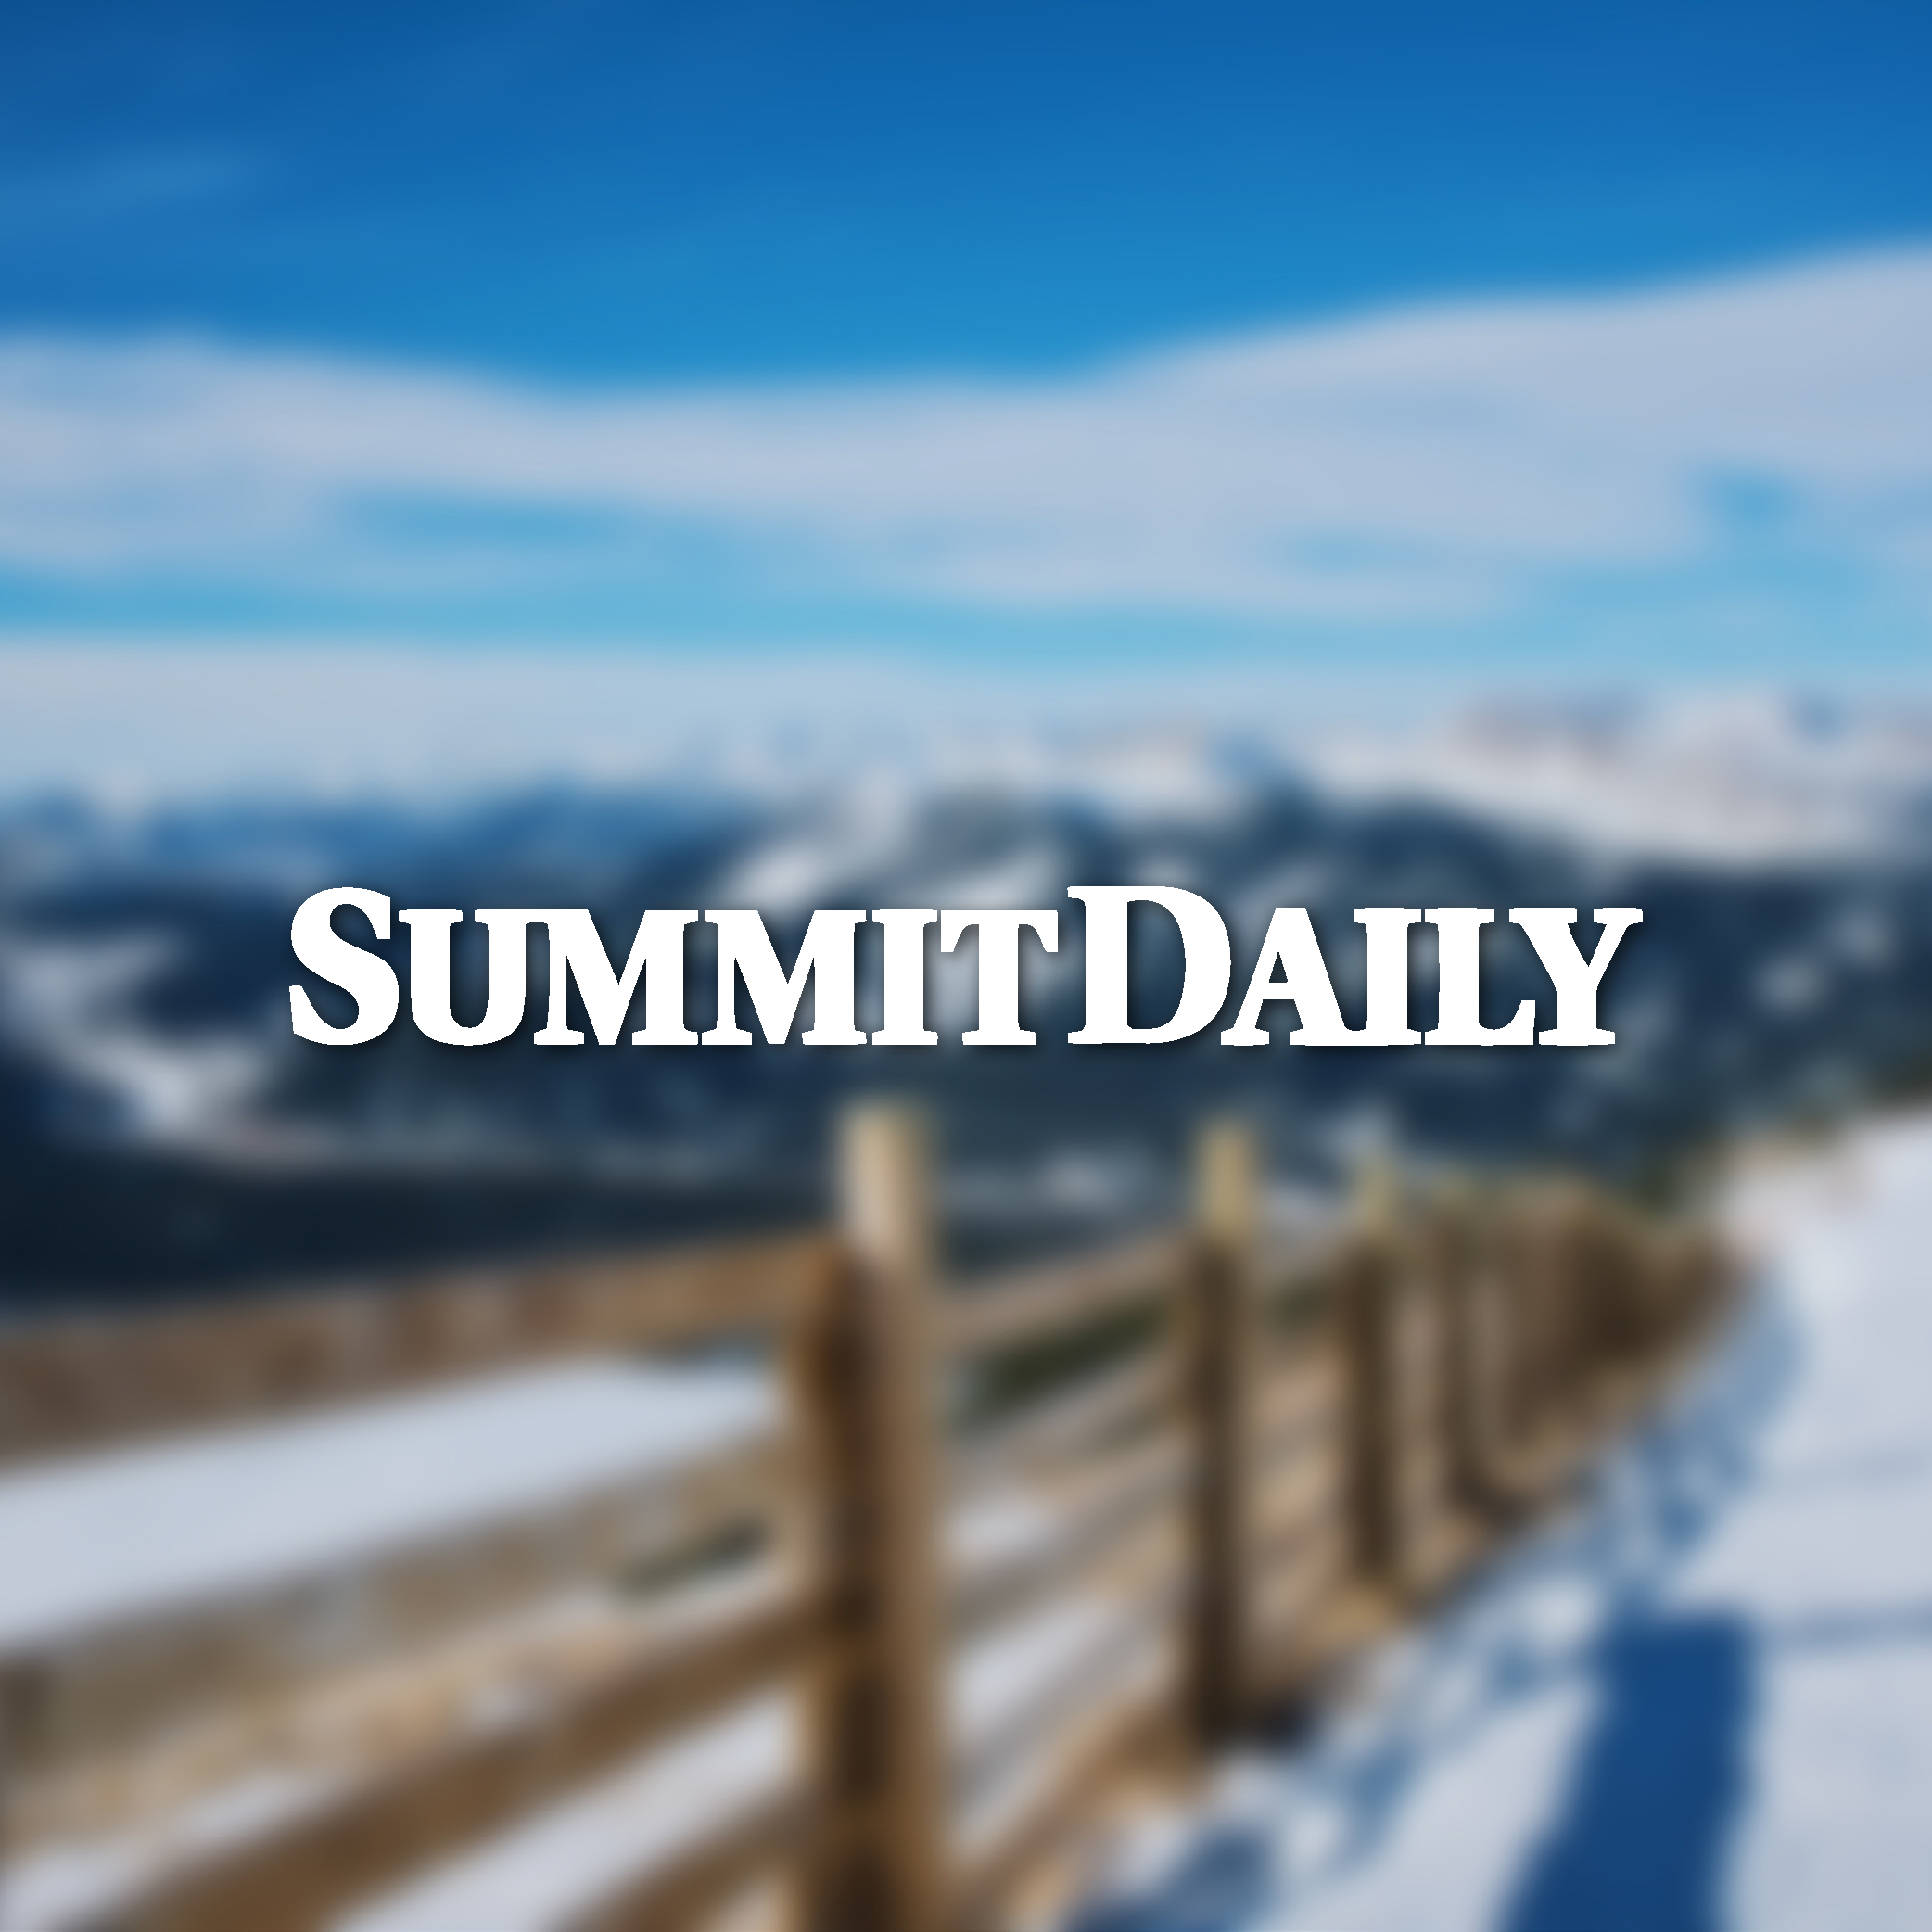 Summit Daily News